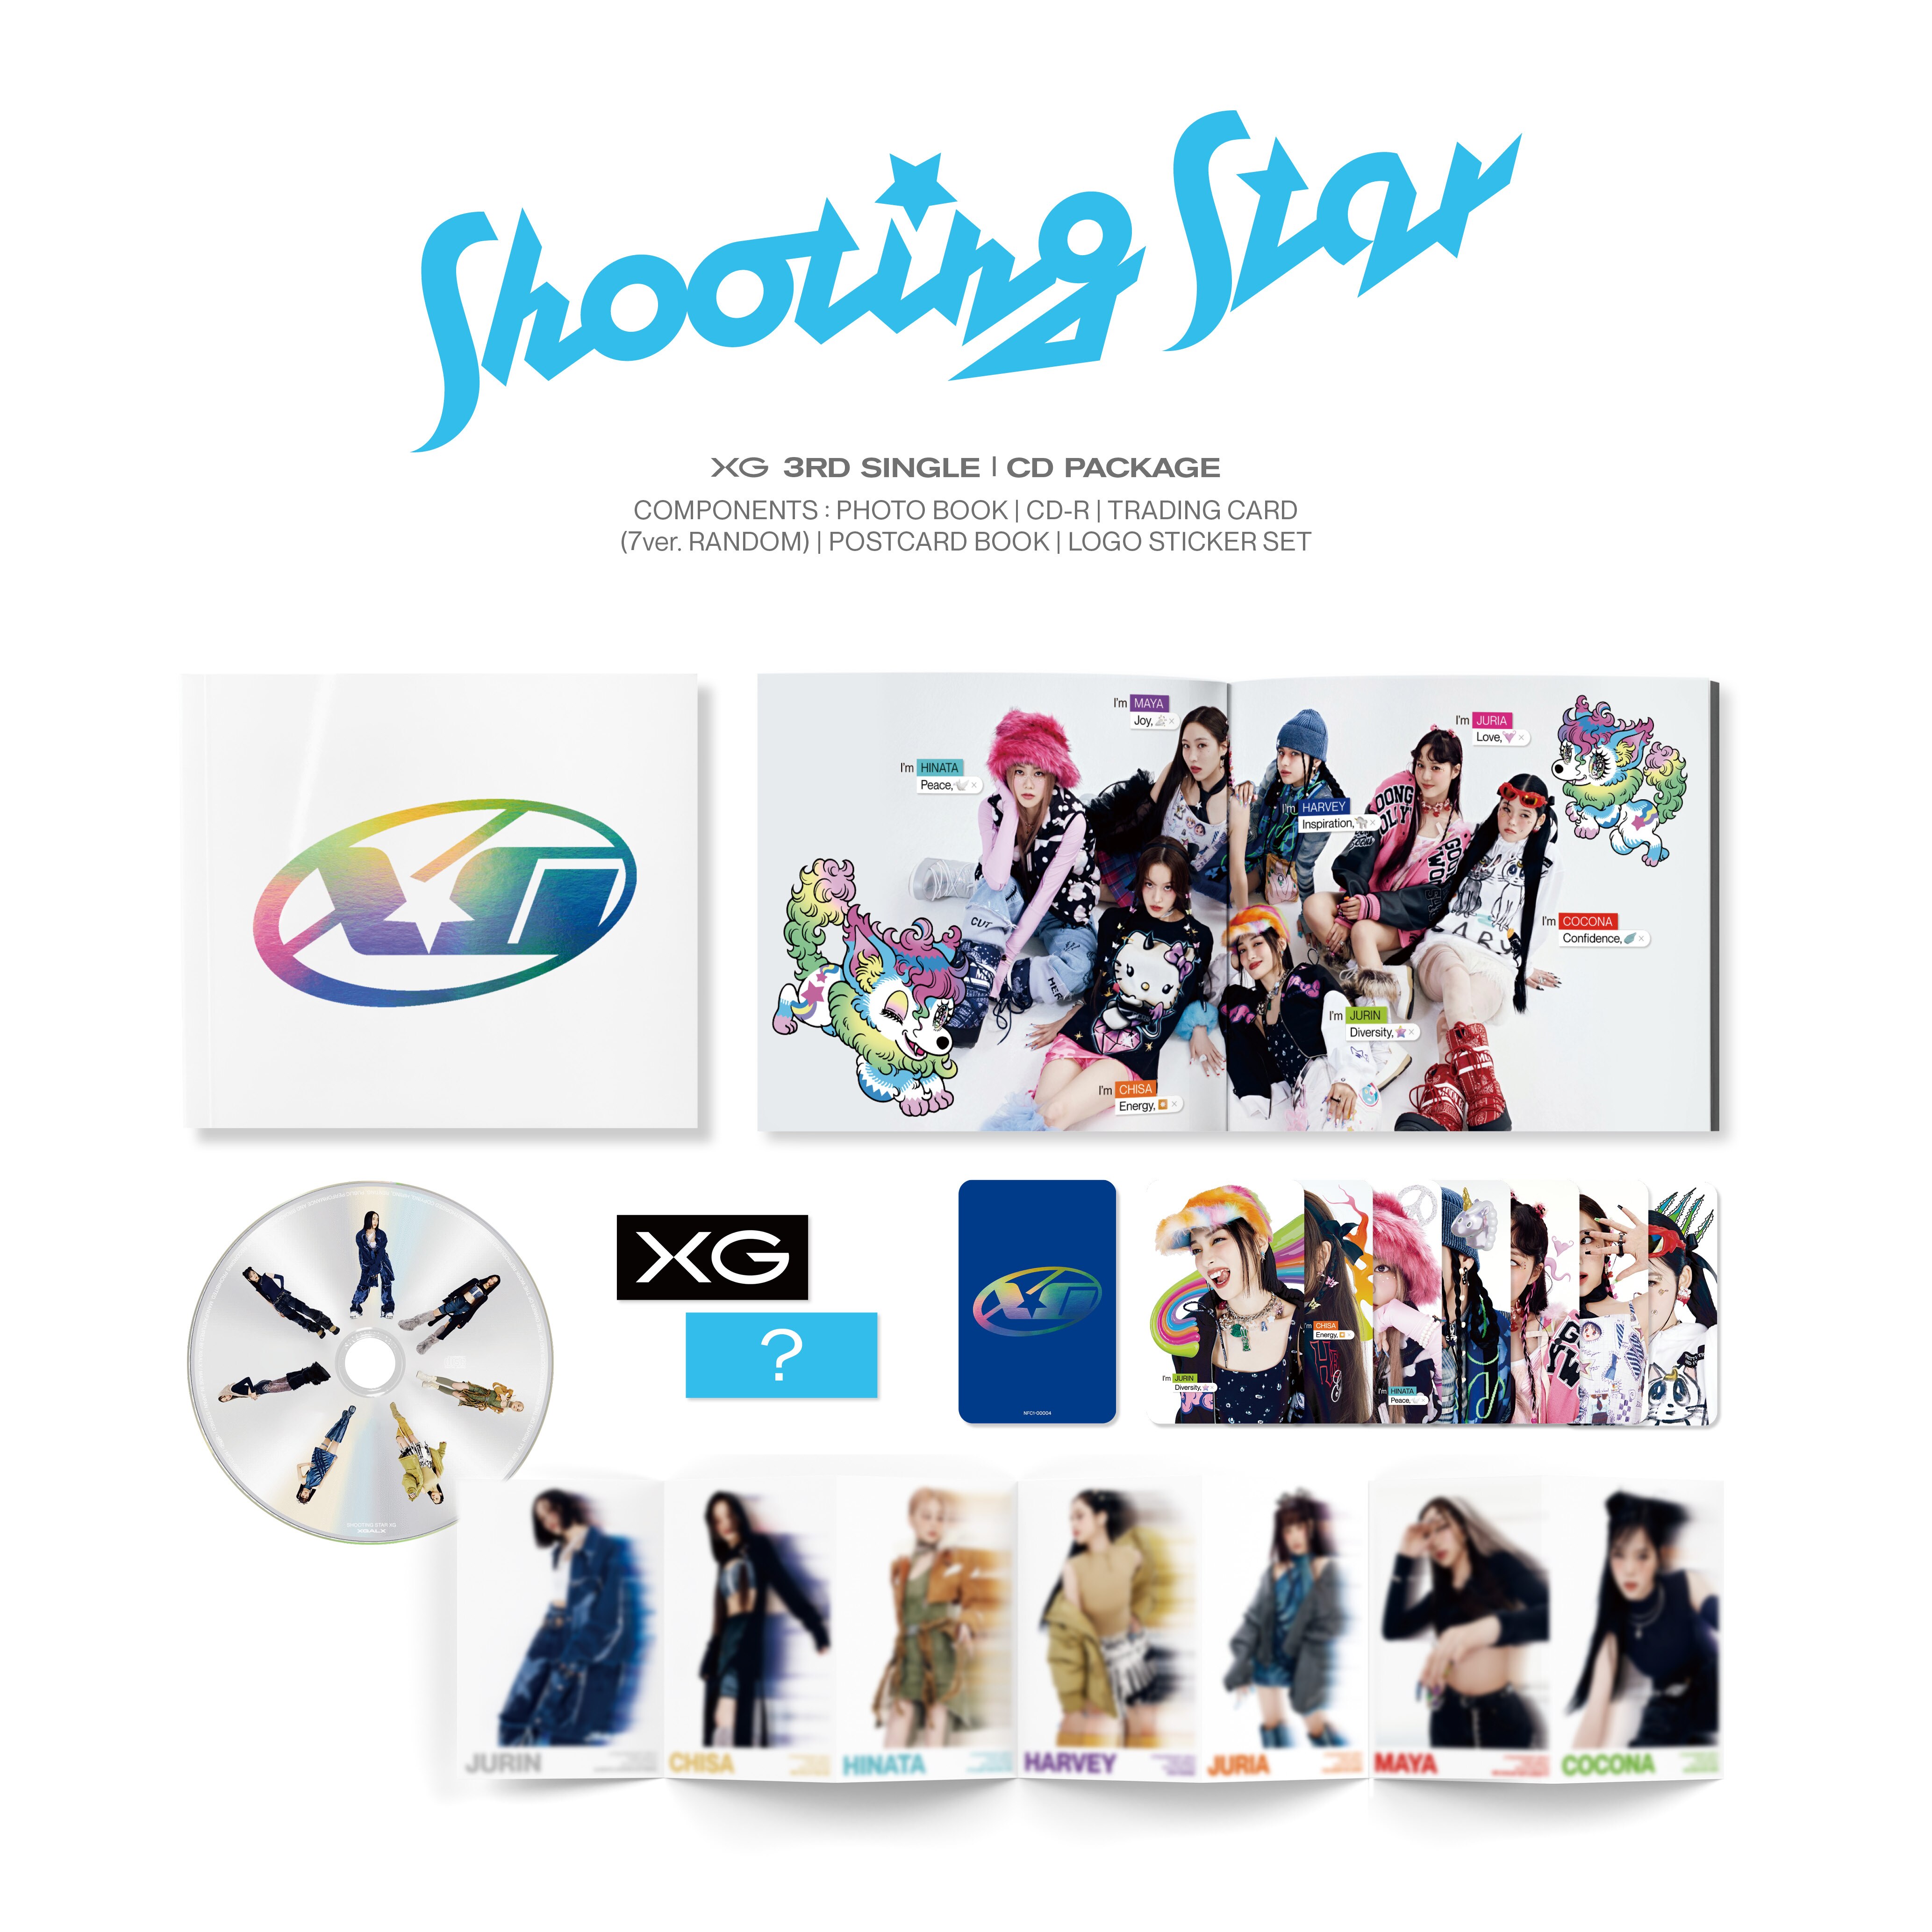 XG's 3rd single, “SHOOTING STAR” - Limited Edition CD Box Set